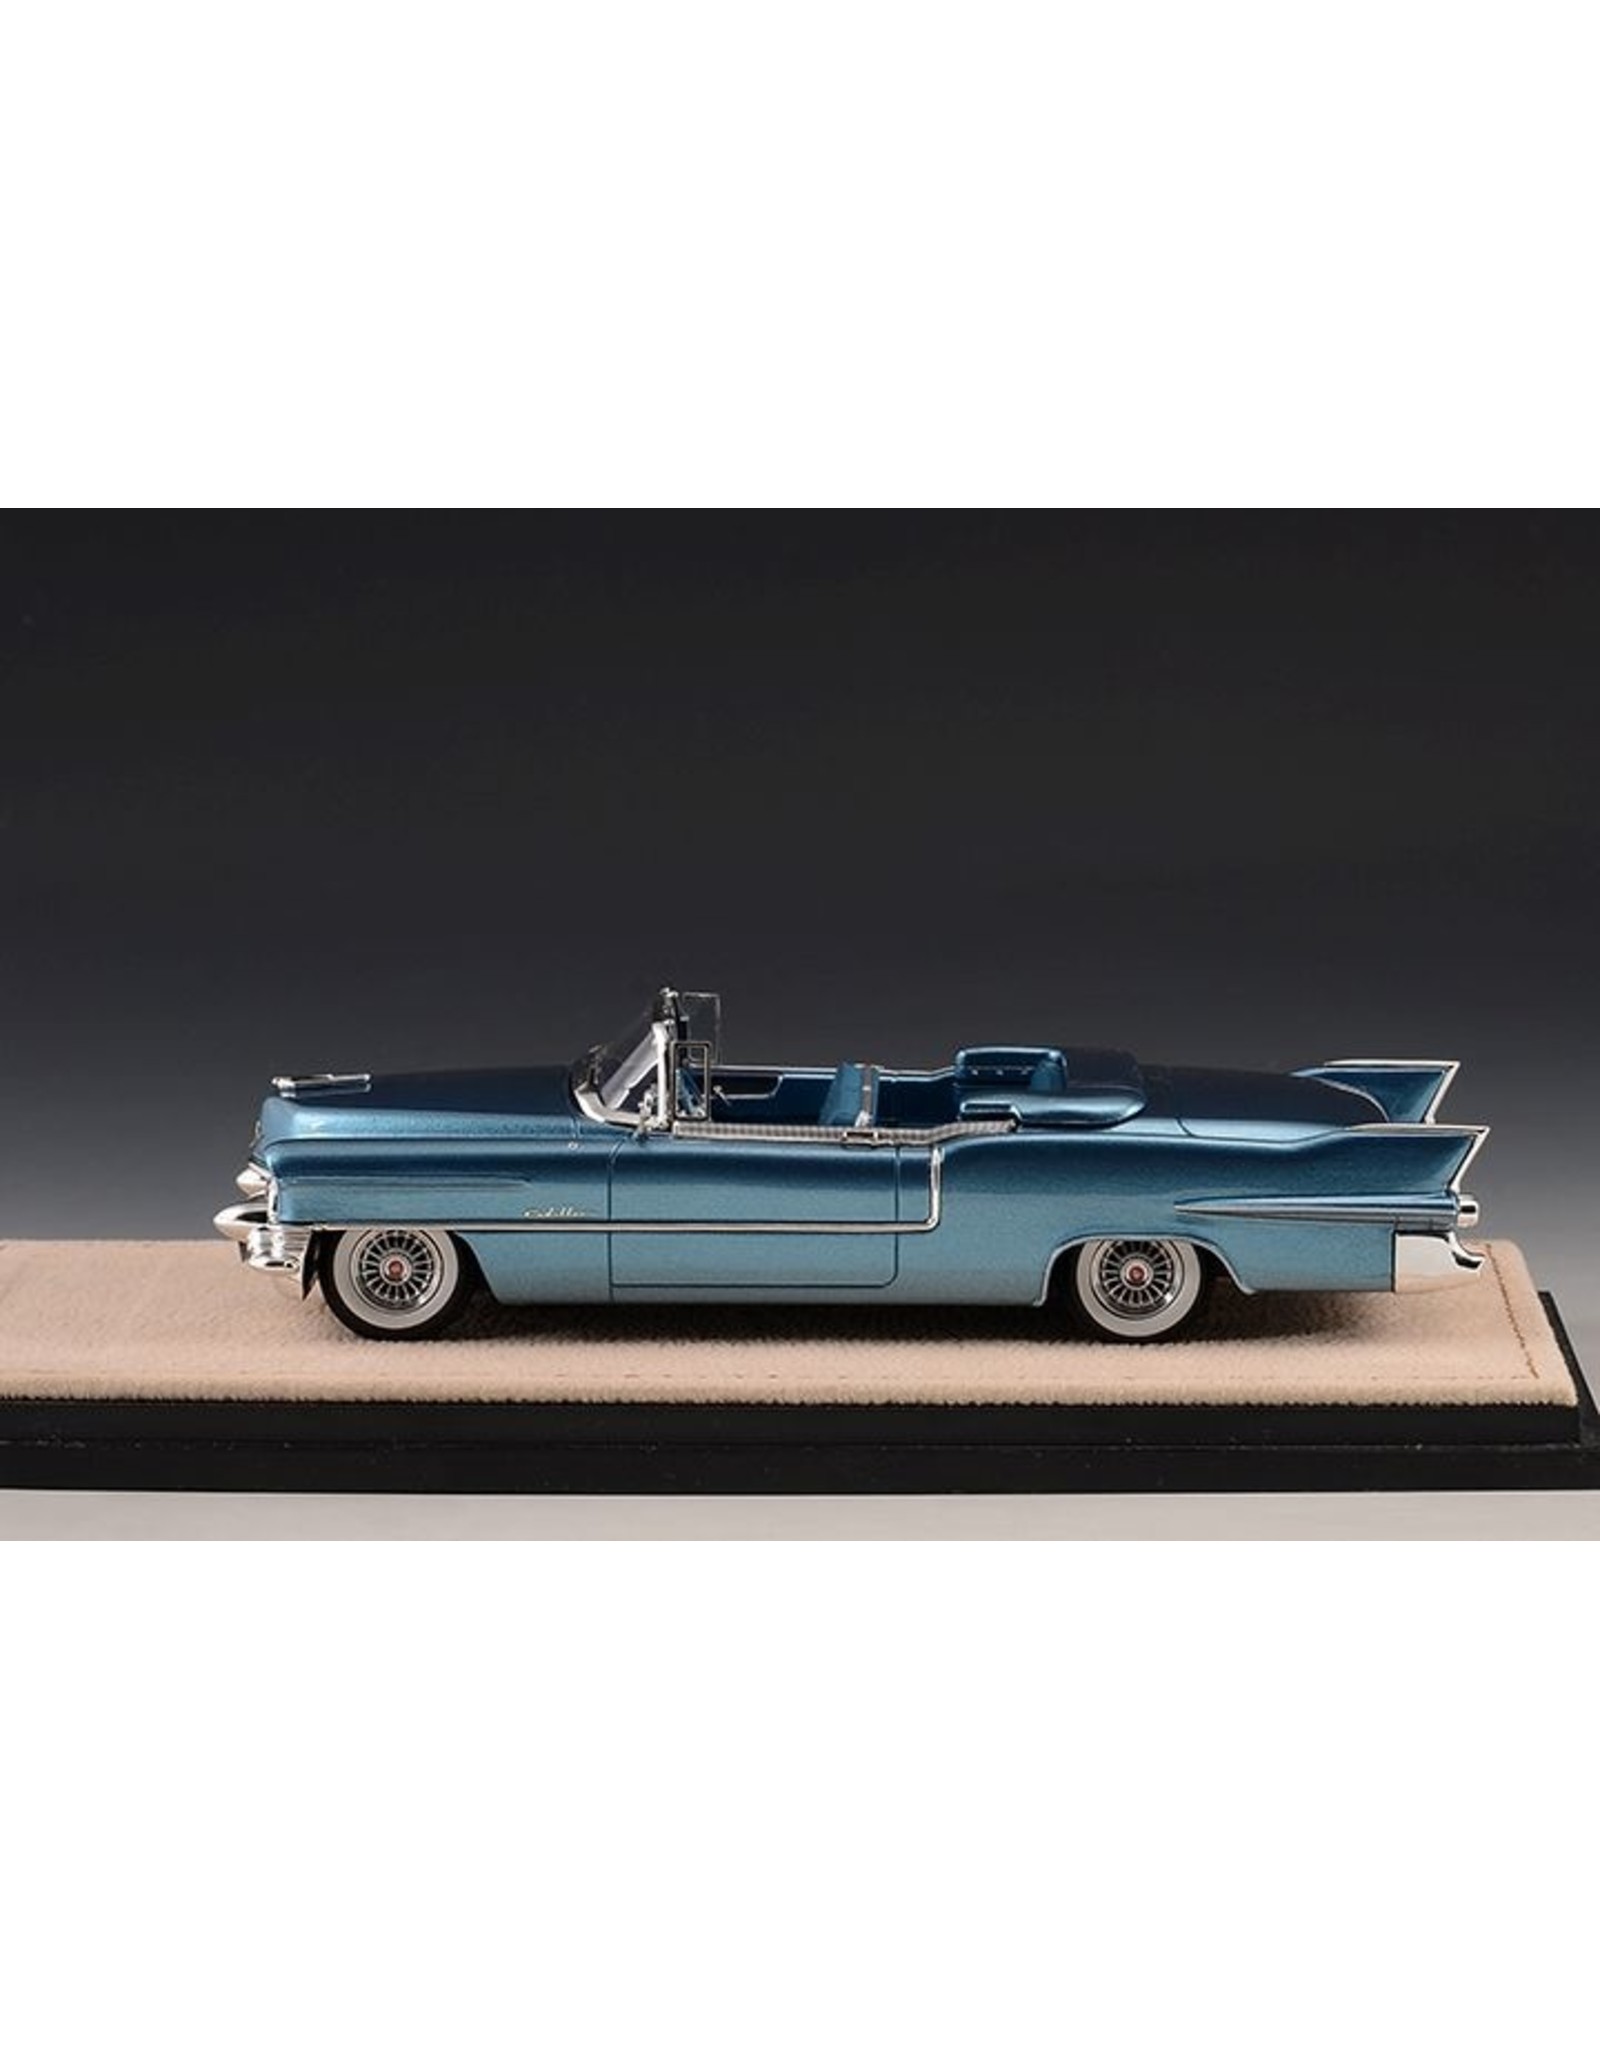 Cadillac(General Motors) Cadillac Eldorado Biarritz(1955)open top(Bahama blue metallic).